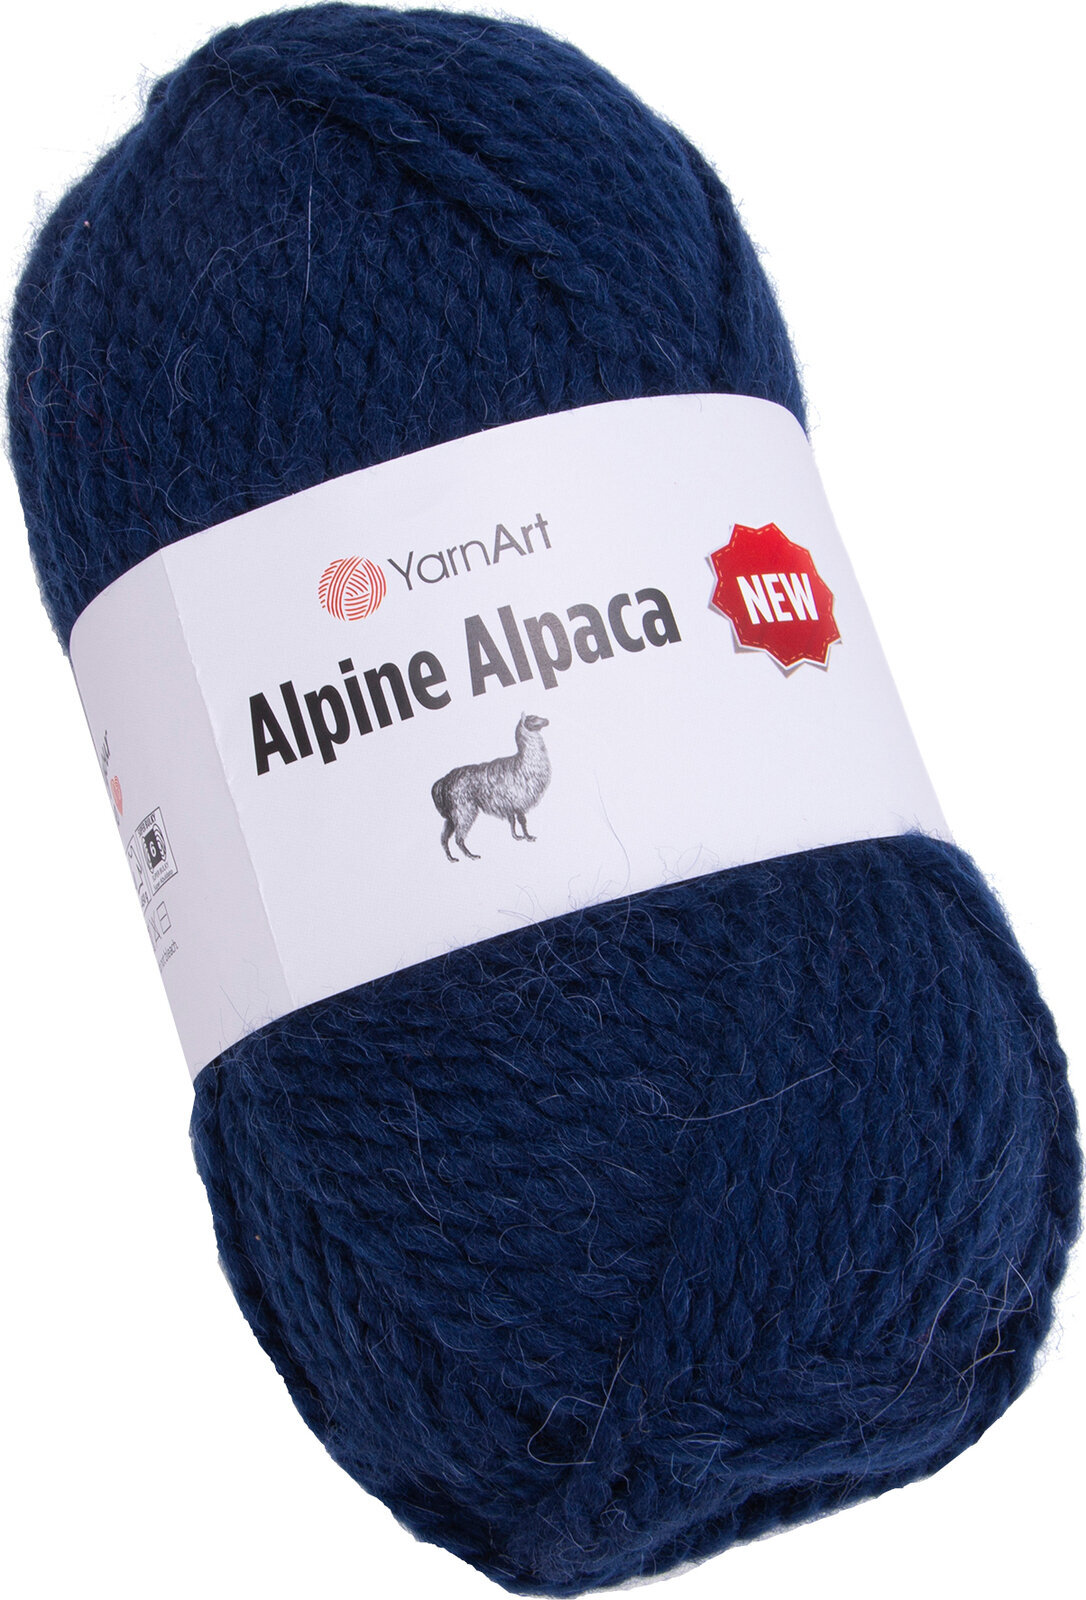 Stickgarn Yarn Art Alpine Alpaca New 1437